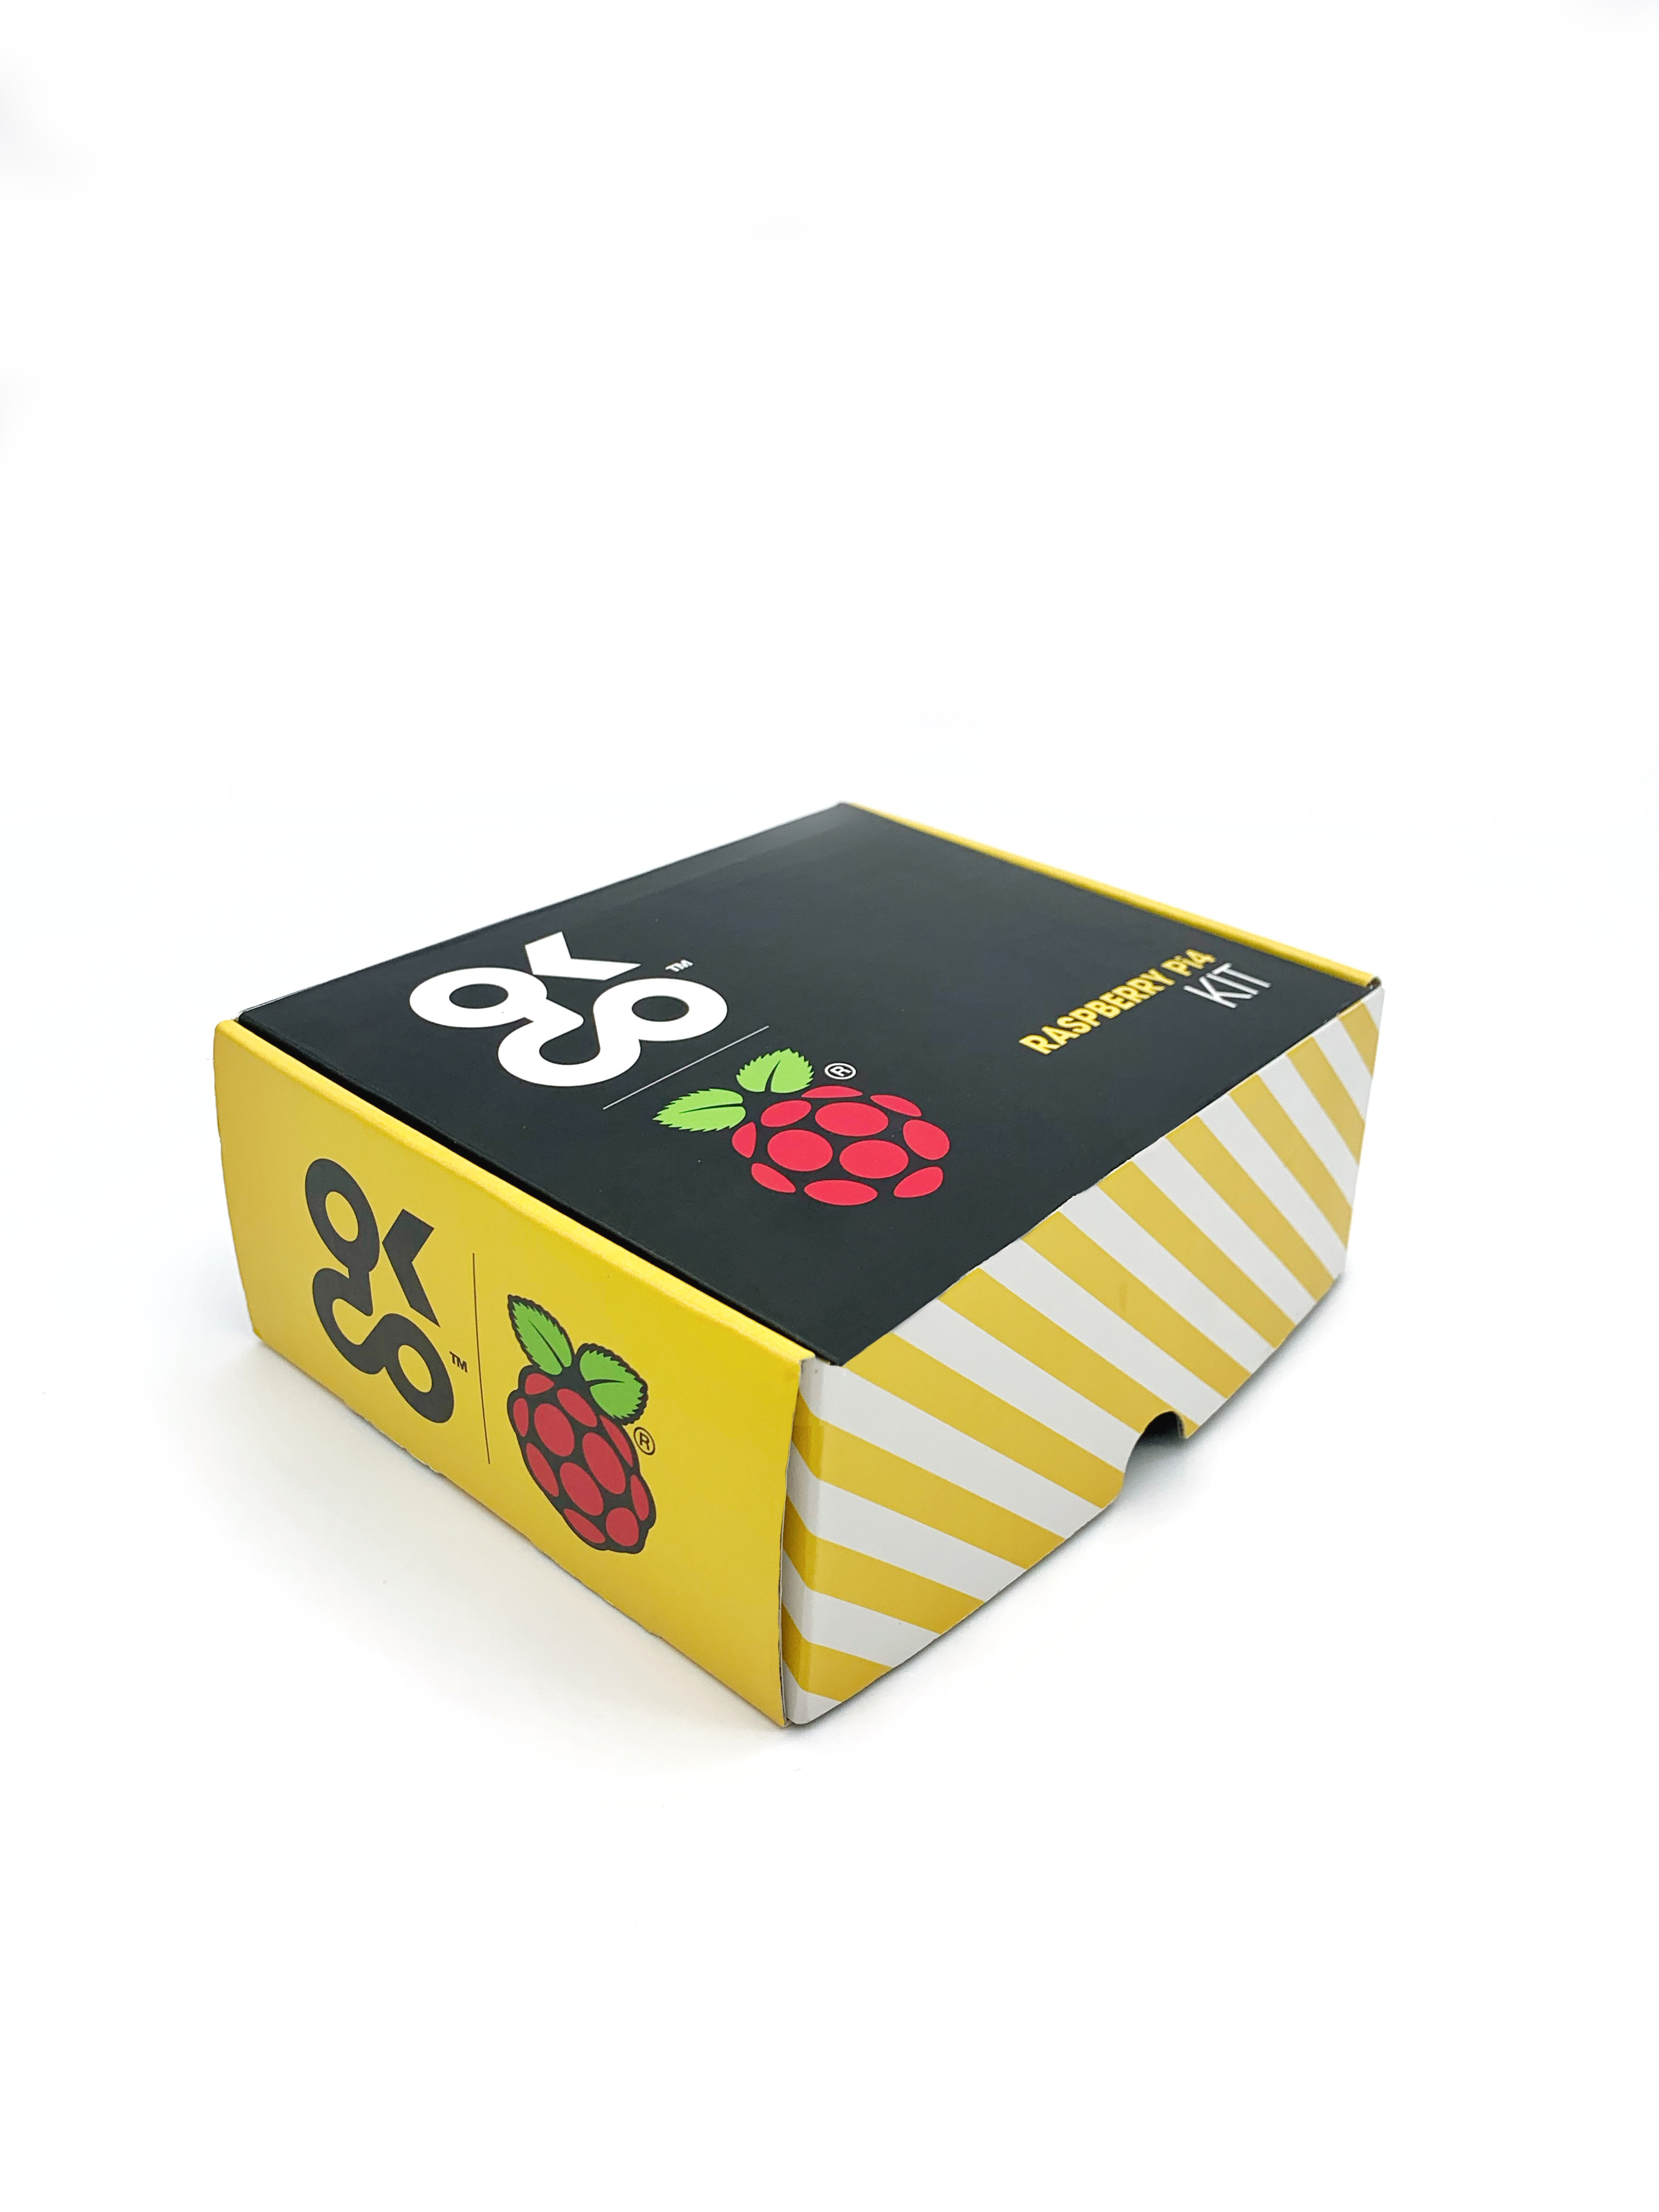 OKdo Raspberry Pi 4 8 GB Basis-Kit Universal version